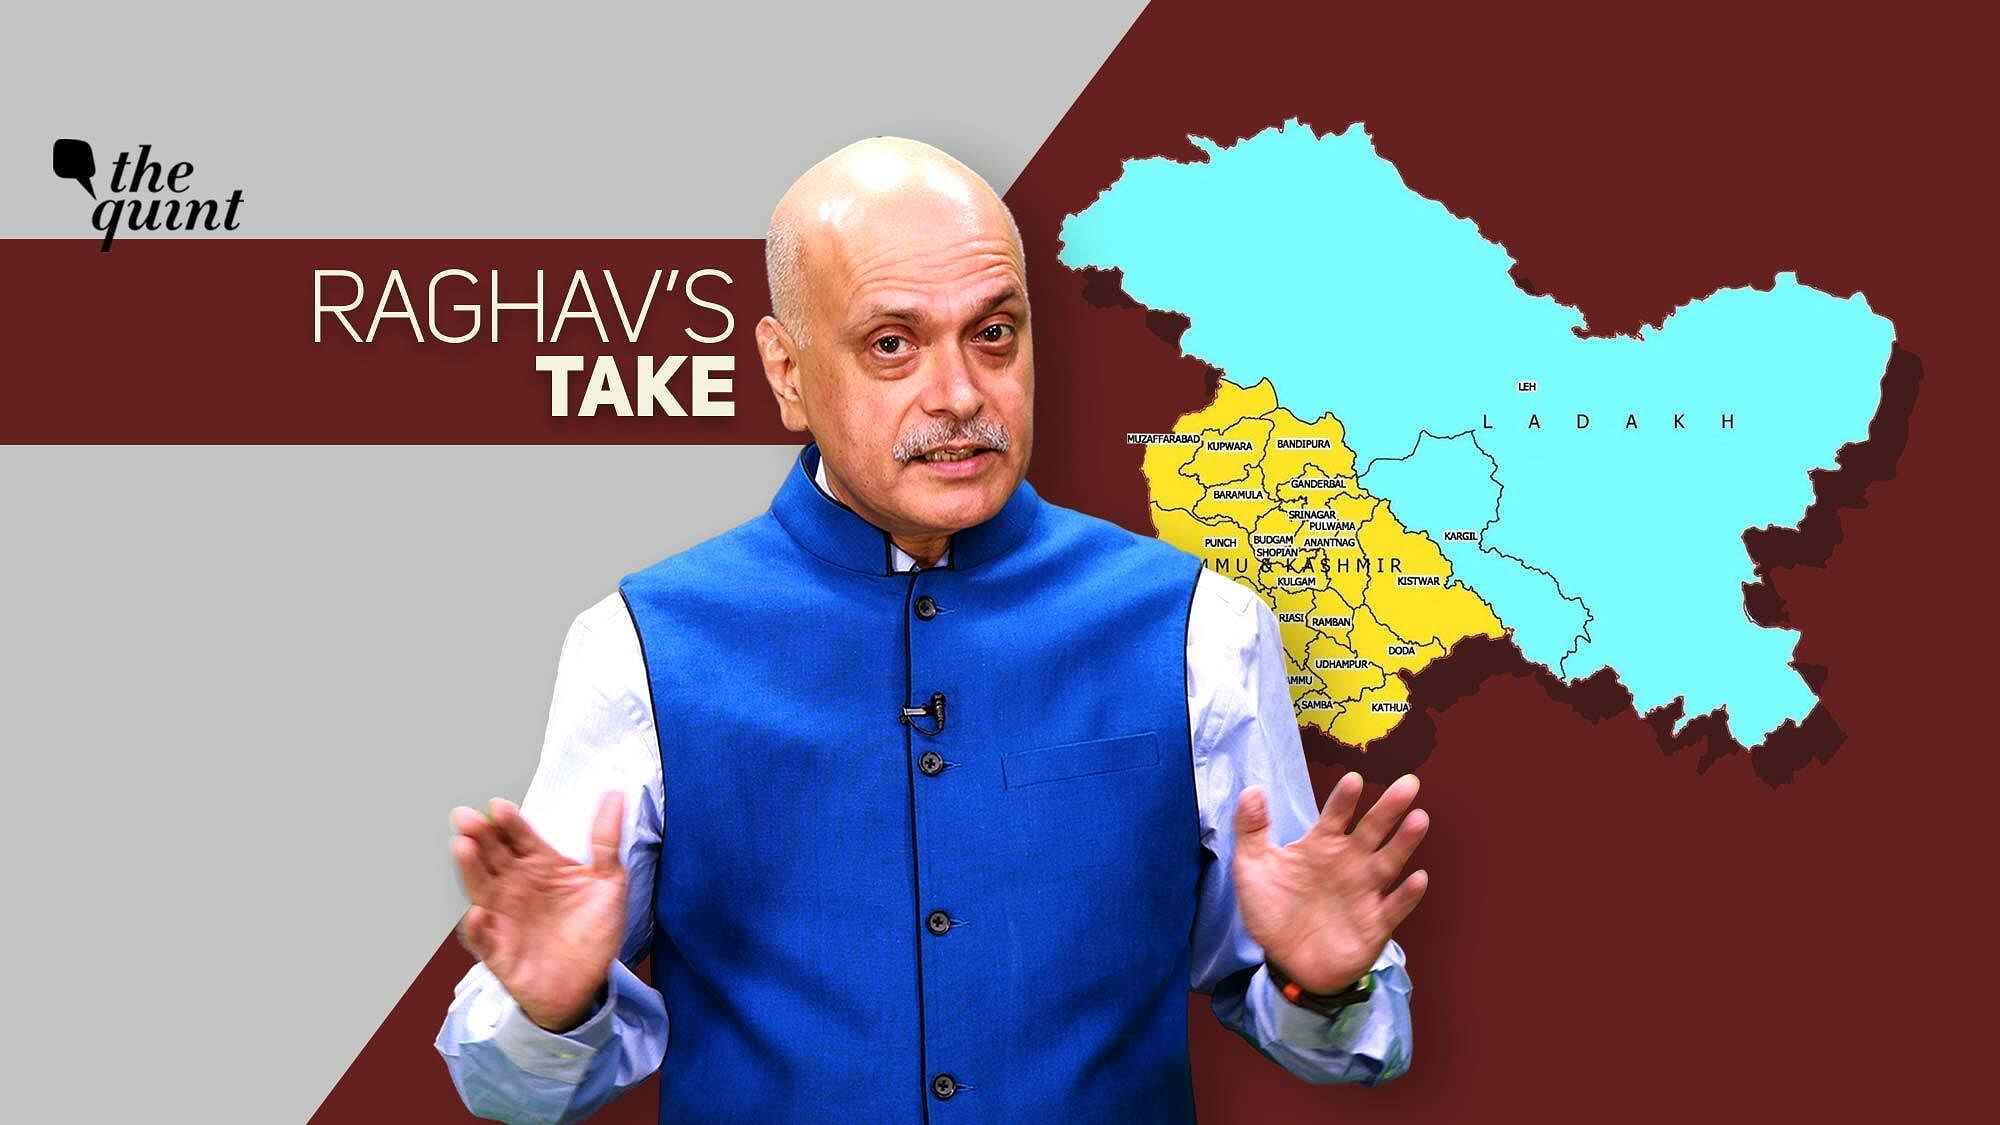 COVID to Maharashtra politics, The Quint’s Editor-in-Chief Raghav Bahl shares his views on pertinent developments.